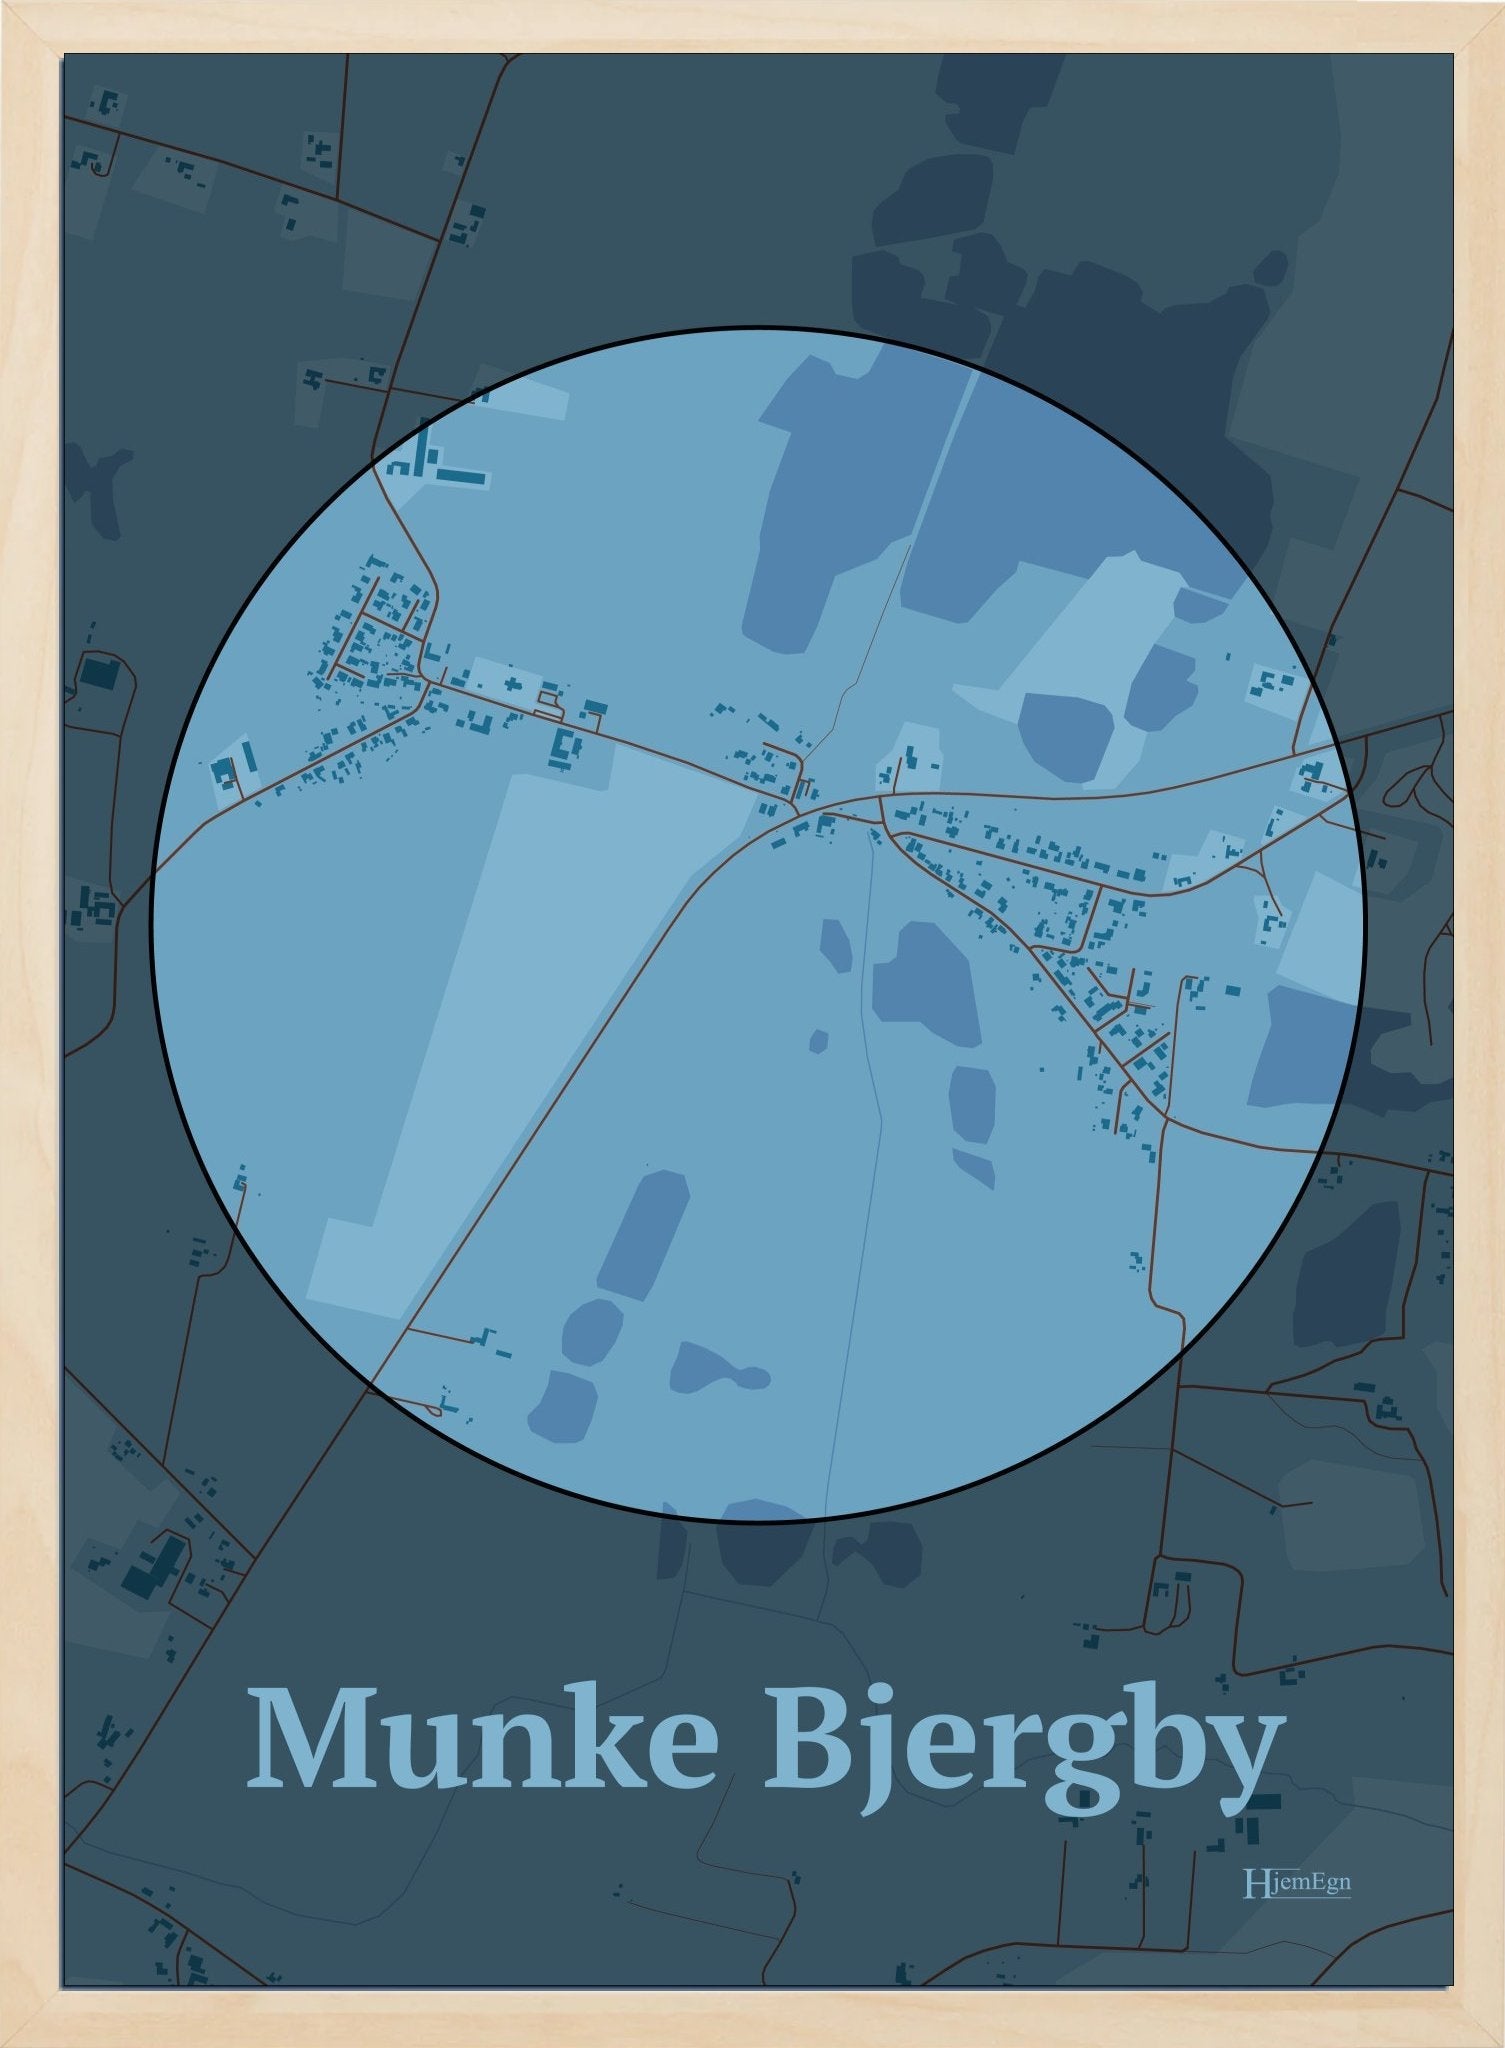 Munke Bjergby plakat i farve pastel blå og HjemEgn.dk design centrum. Design bykort for Munke Bjergby